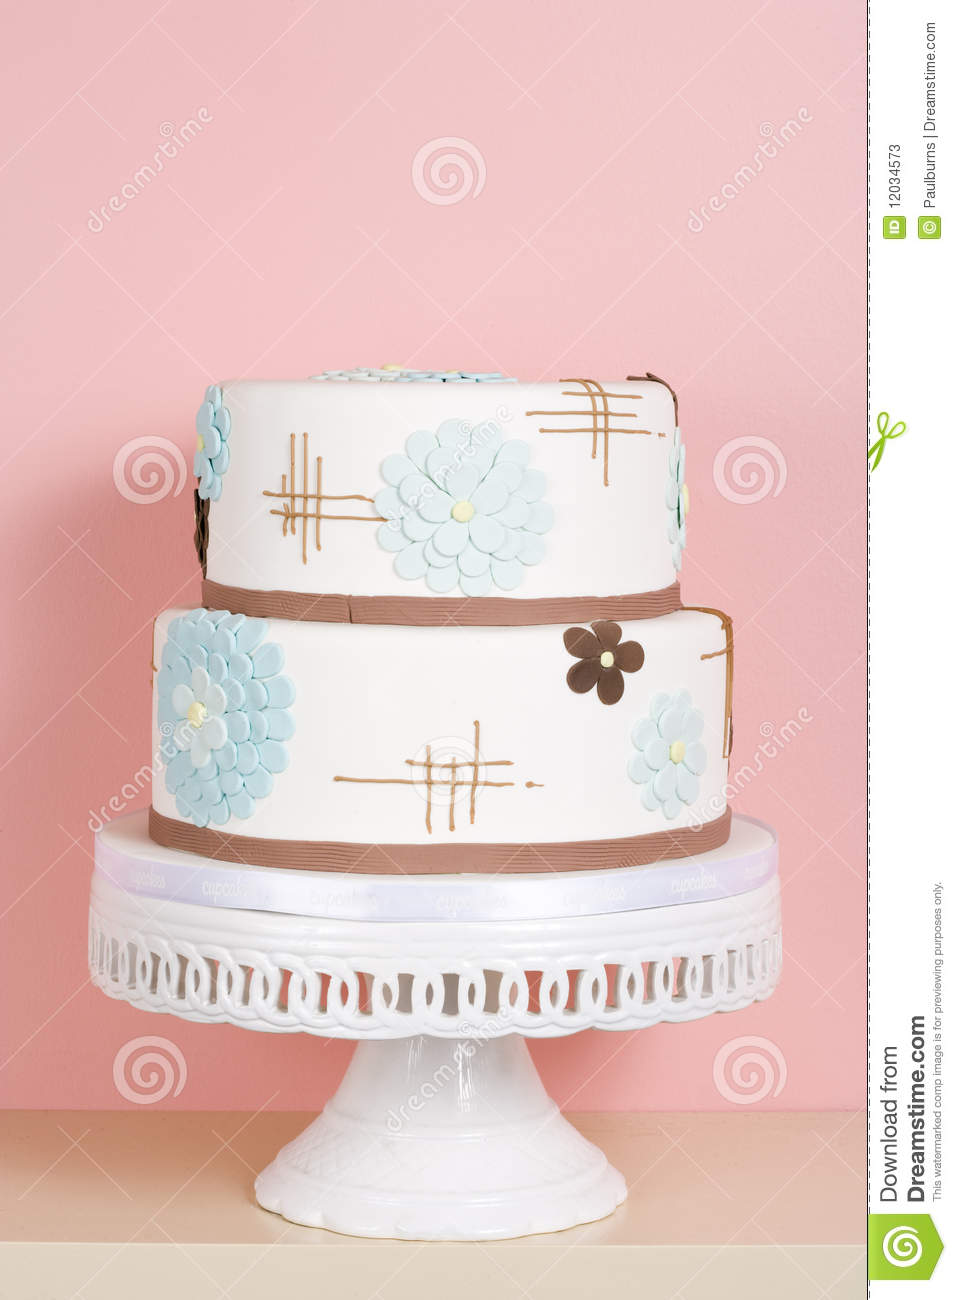 Whimsical Cake Against Pink Background Stock Photos   Image  12034573